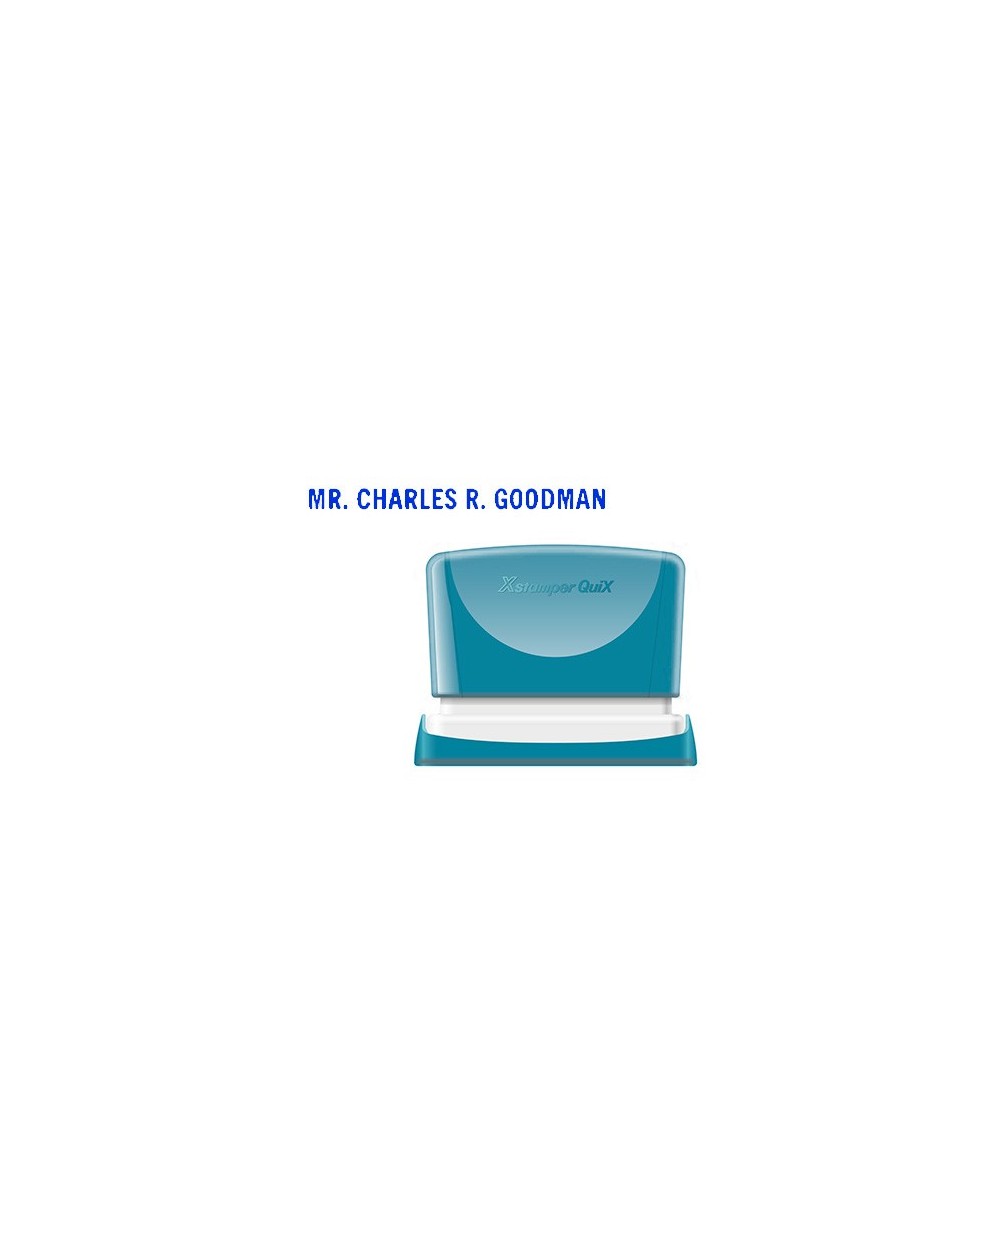 Sello x stamper quix personalizable color azul medidas 4x60 mm q 05